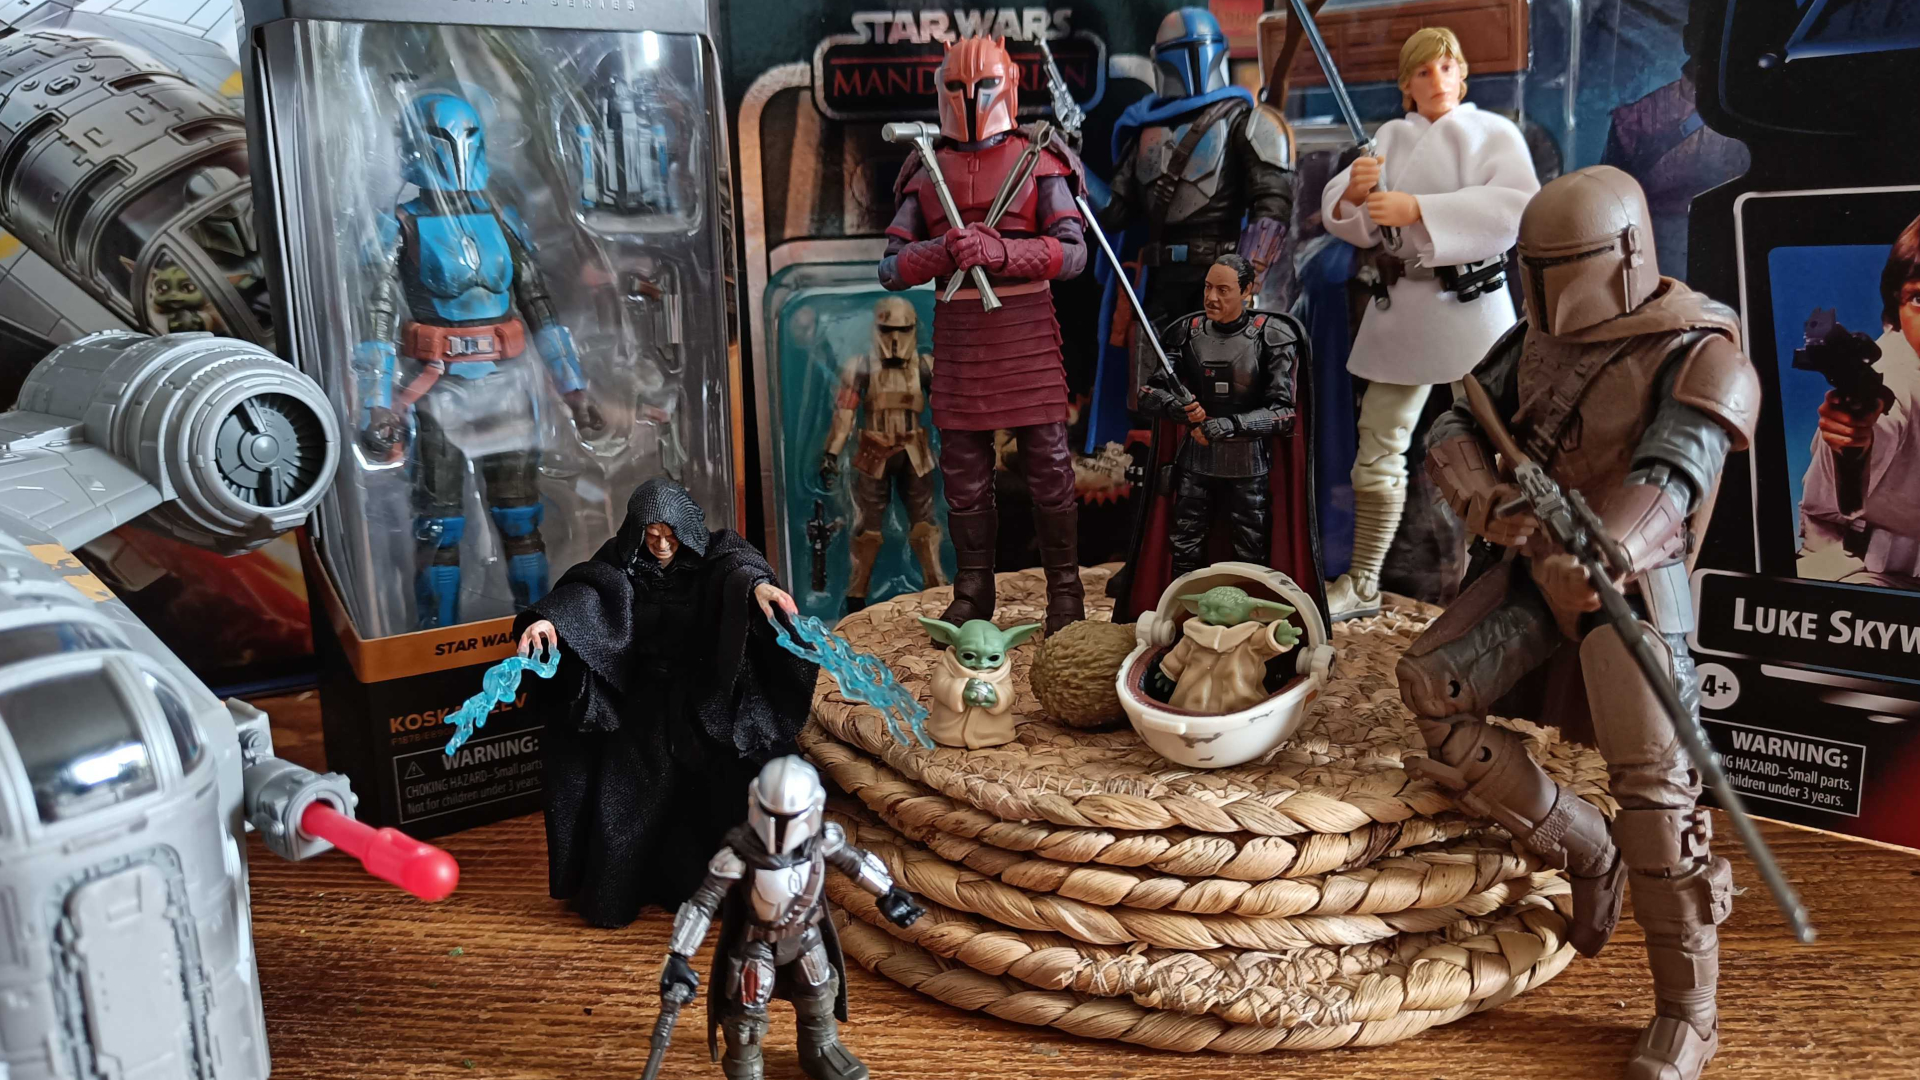 The Mandalorian, Action Figures, Toys, Clothes & More